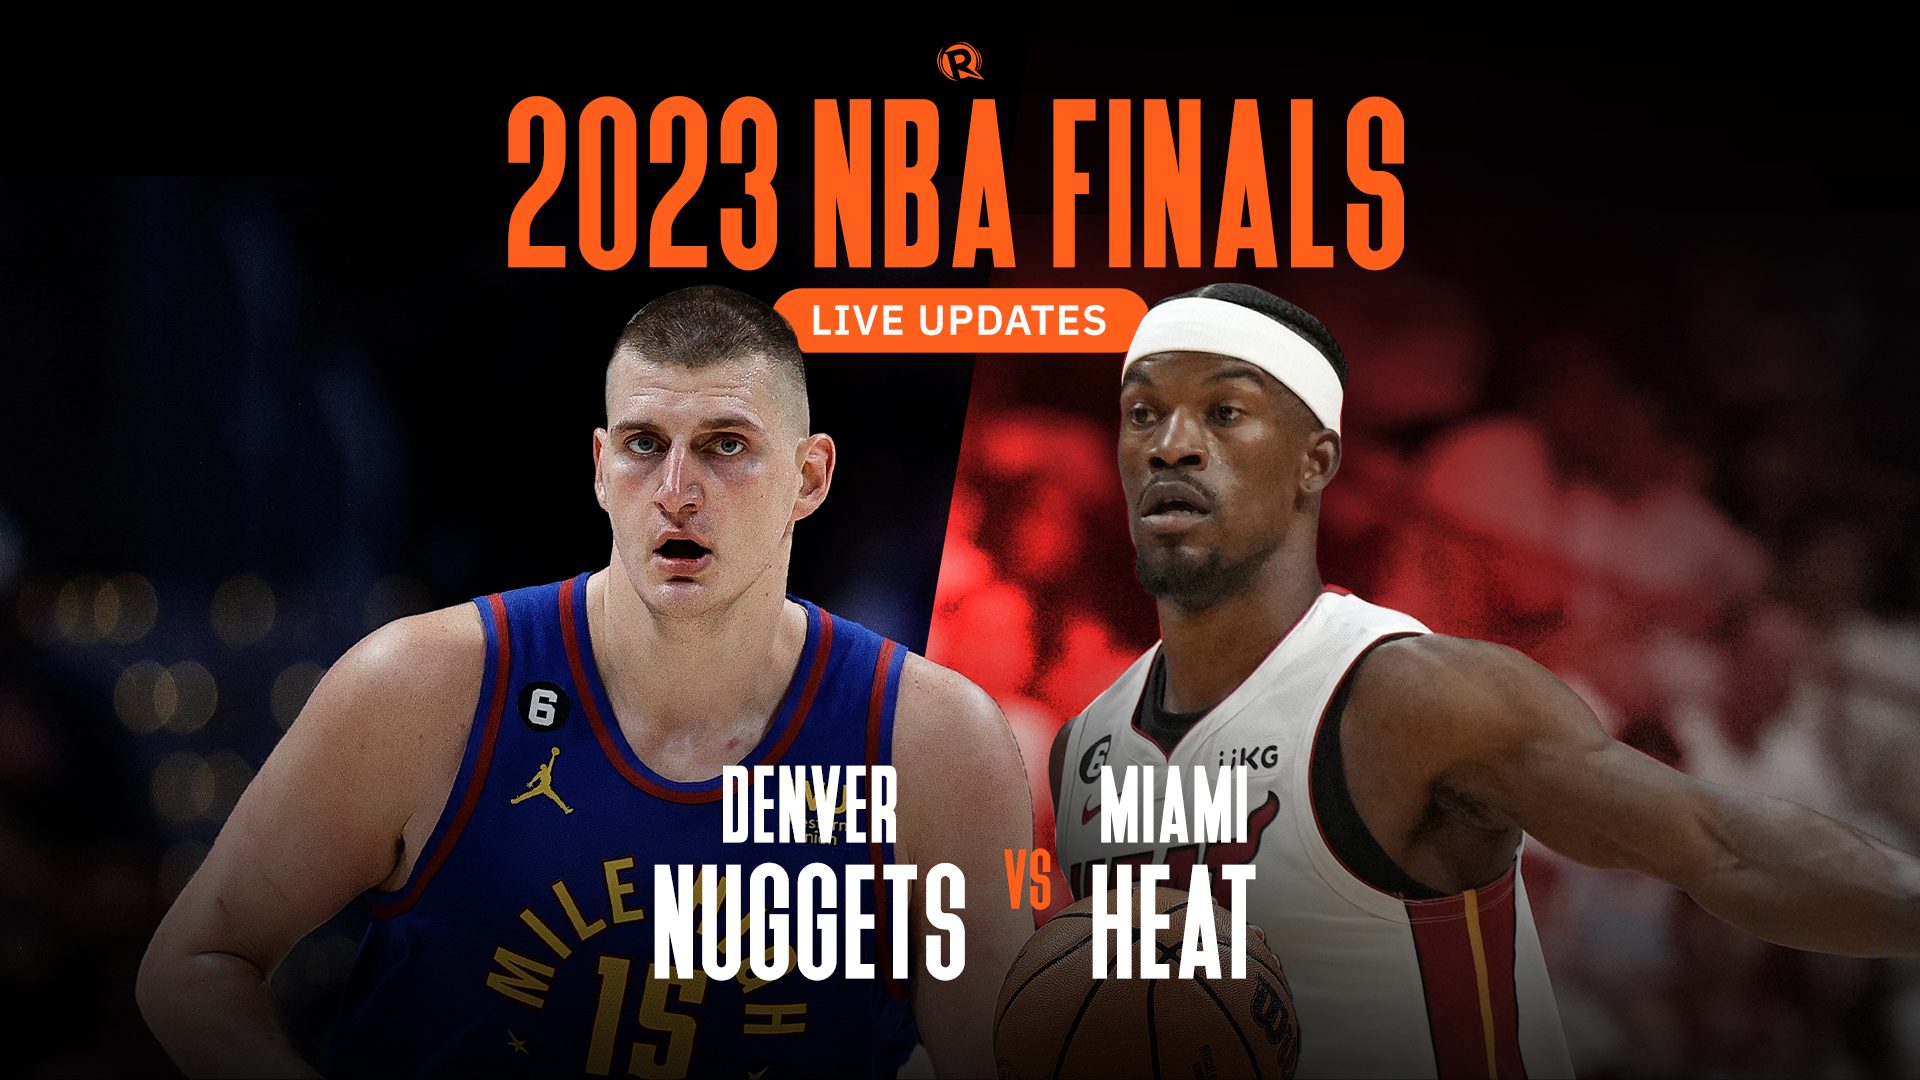 Denver Nuggets NBA Champions 2023 Wallpapers - Wallpaper Cave